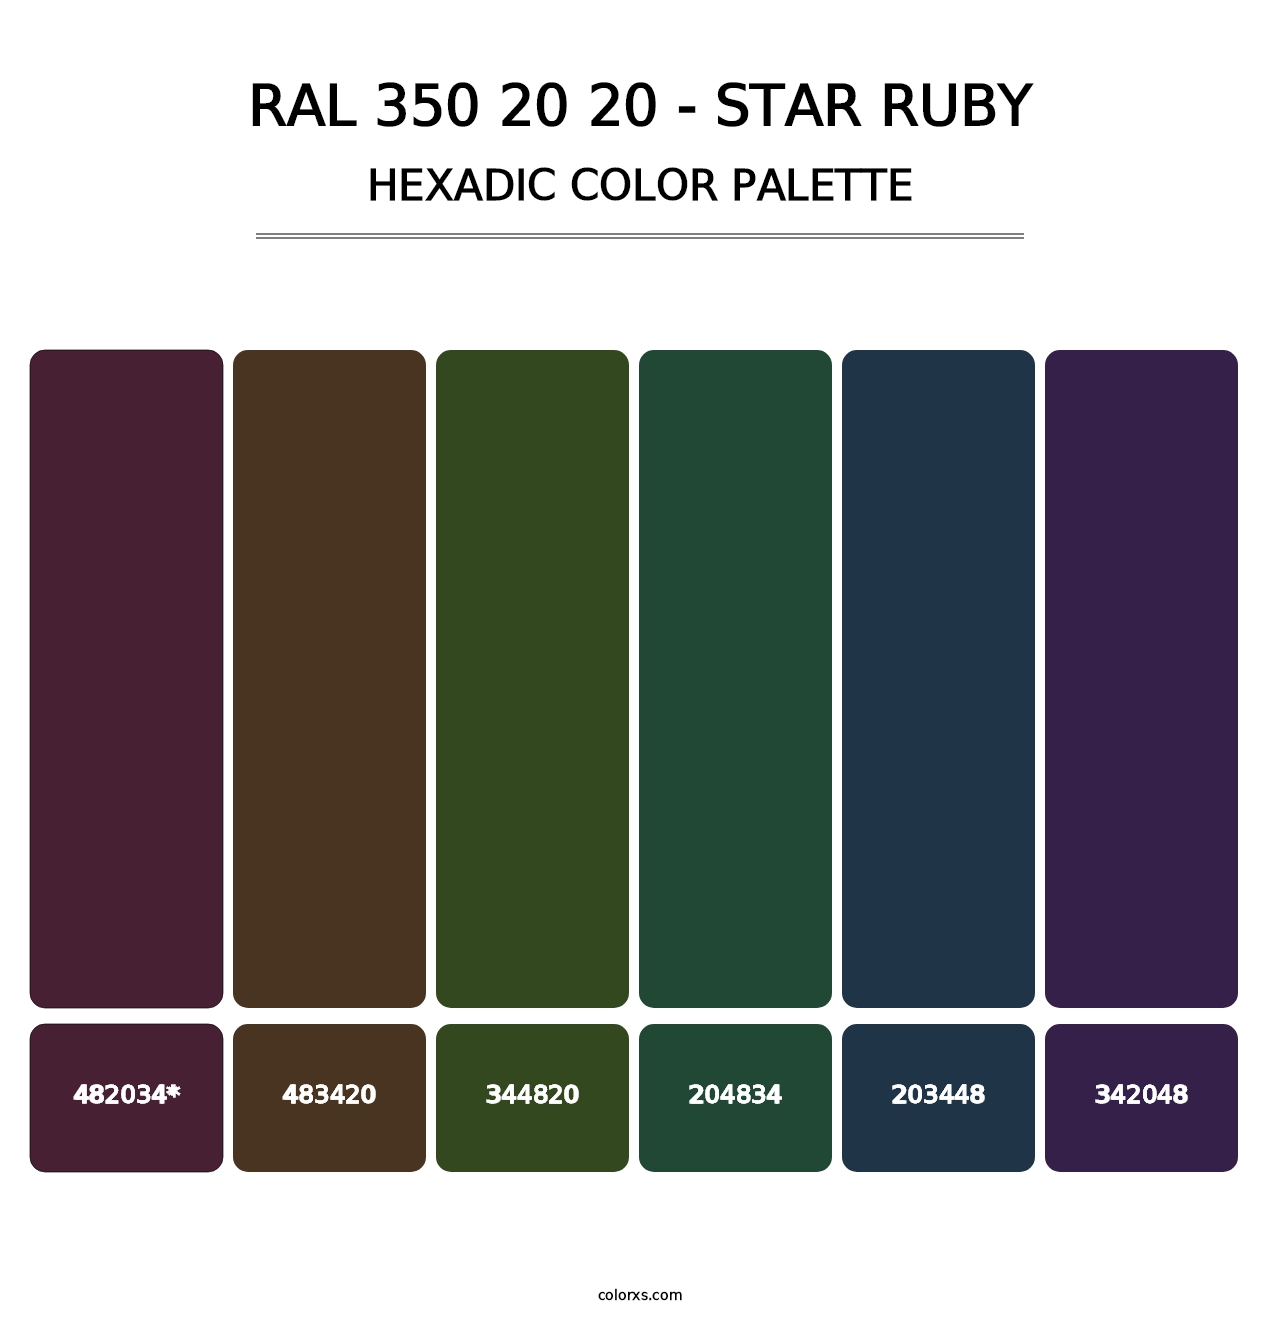 RAL 350 20 20 - Star Ruby - Hexadic Color Palette